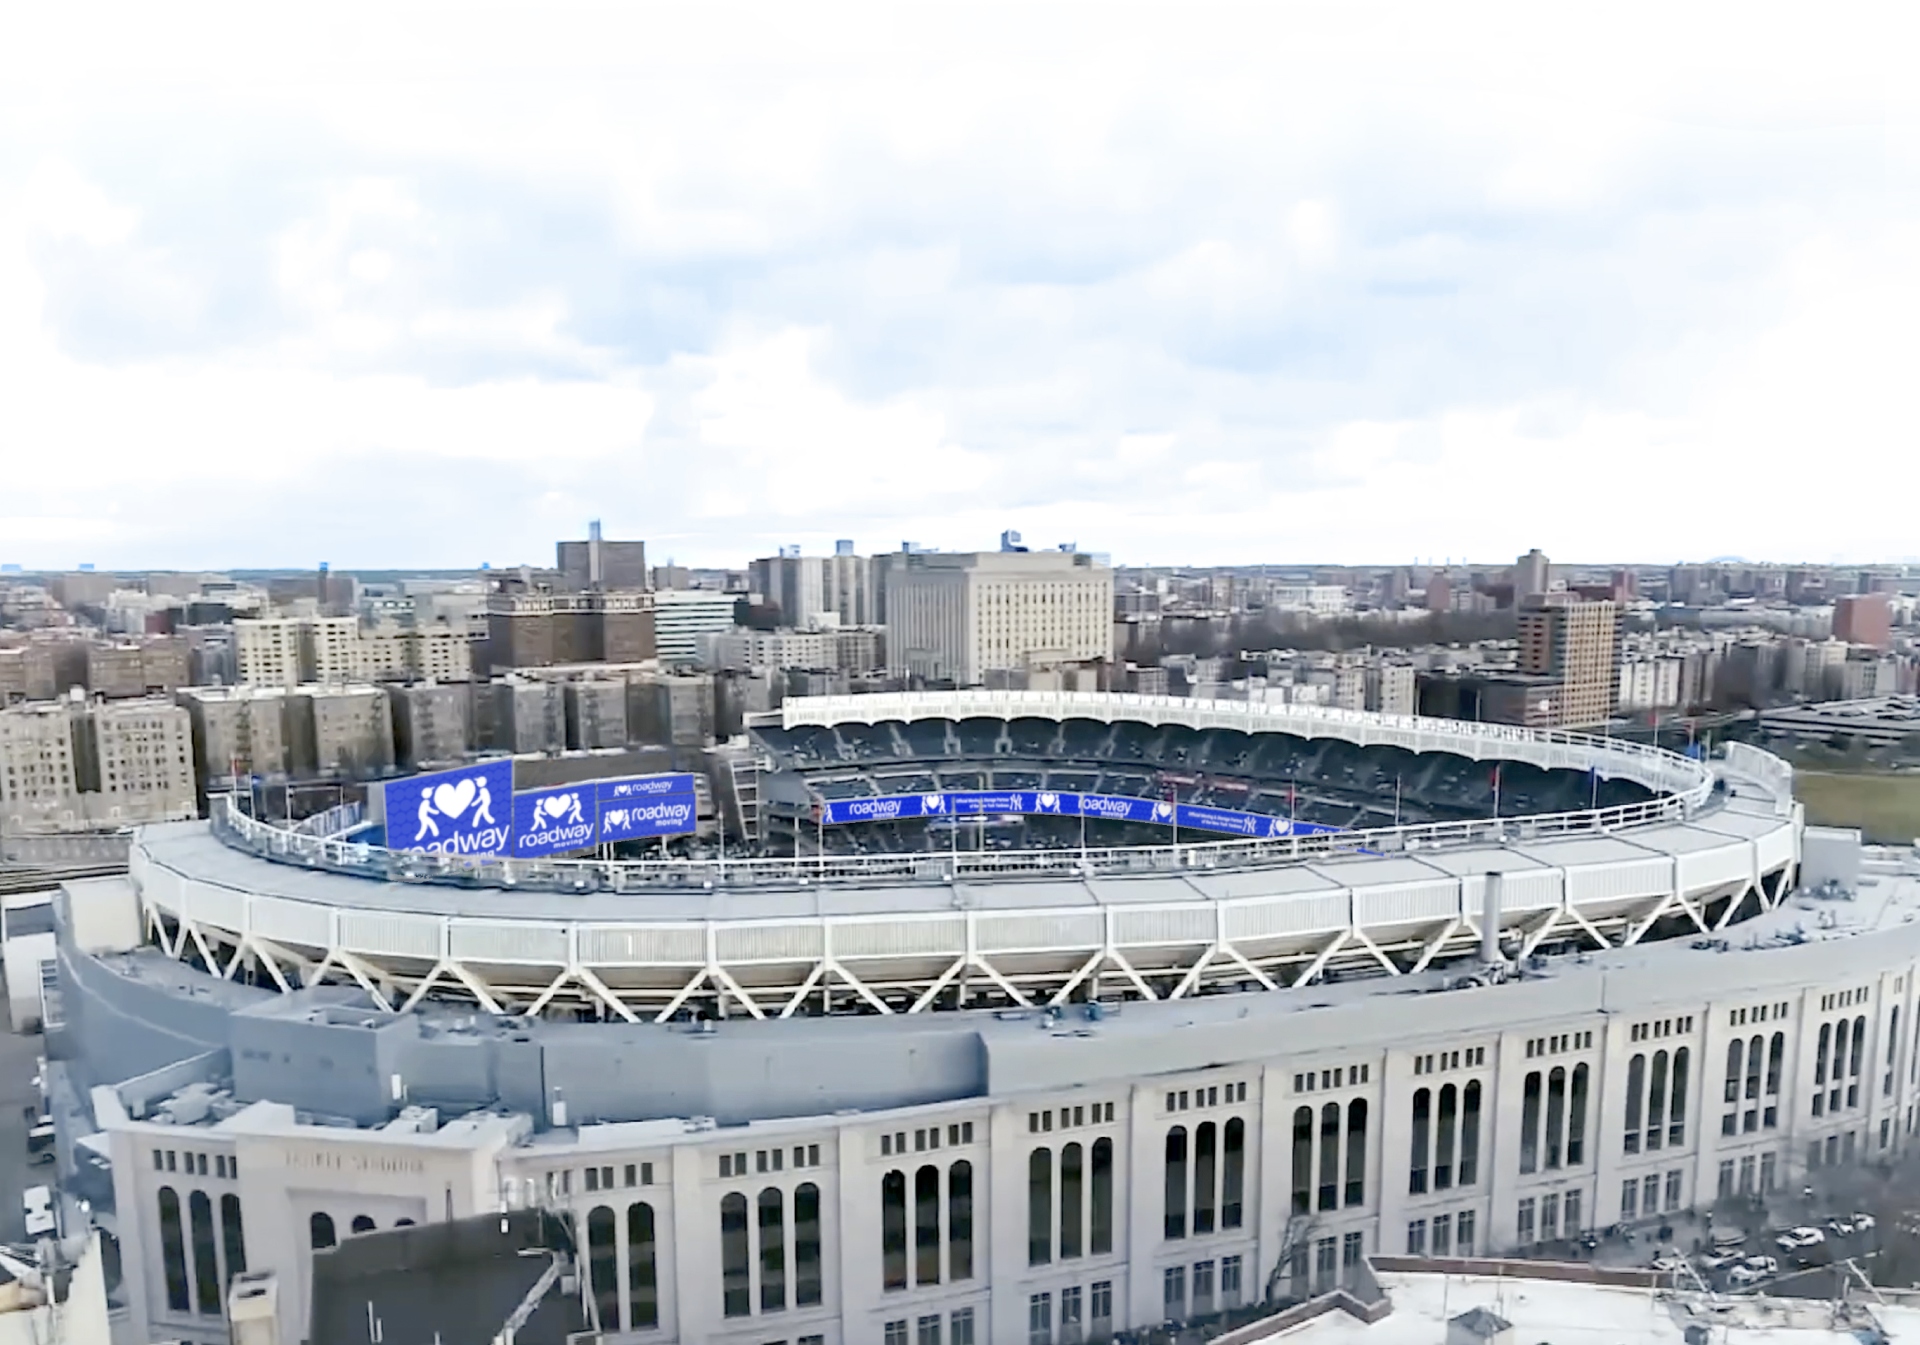 New York Yankees stadium with Roadway Moving ads